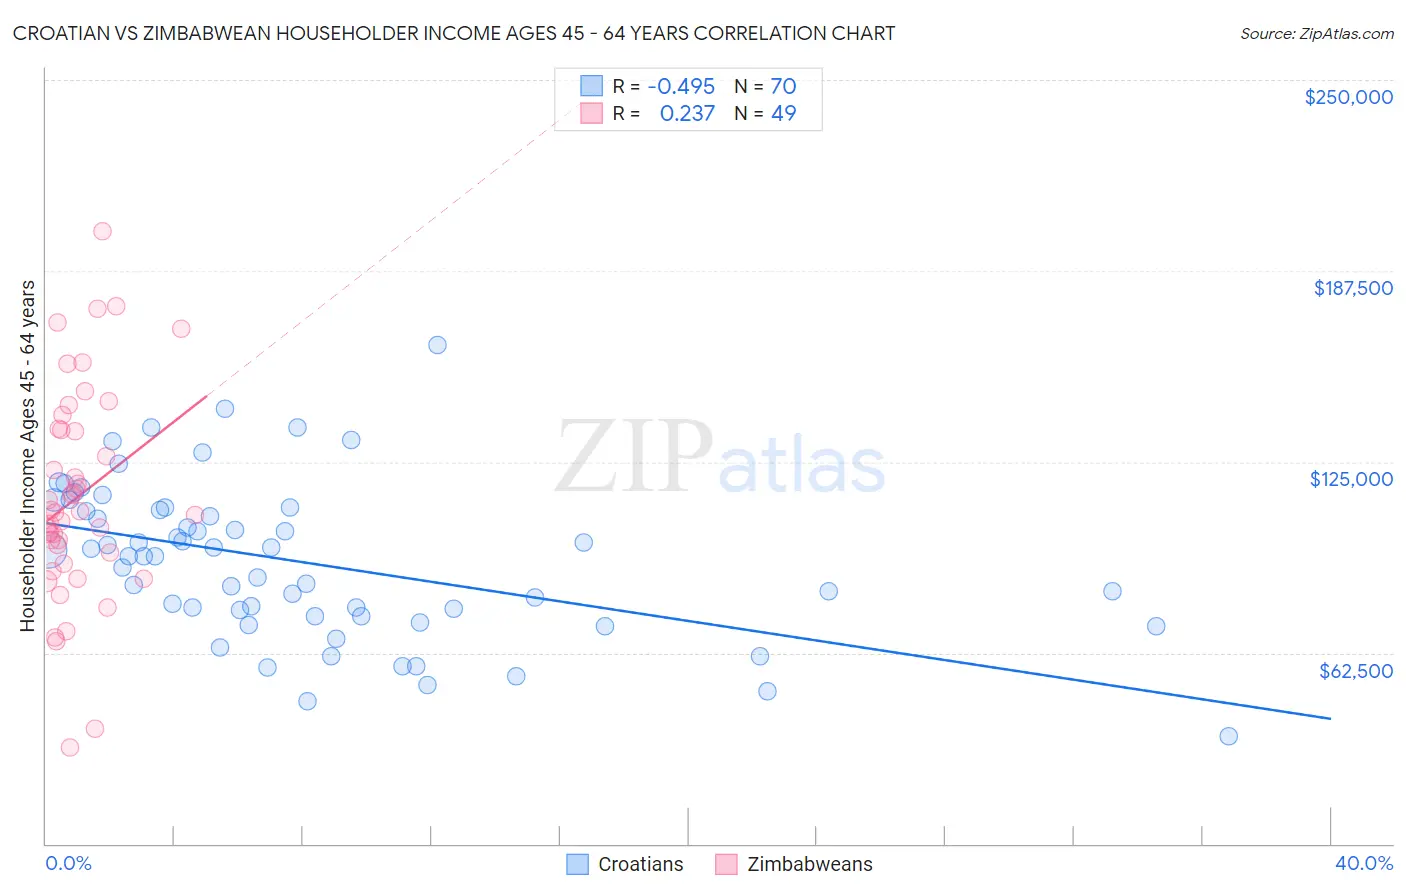 Croatian vs Zimbabwean Householder Income Ages 45 - 64 years